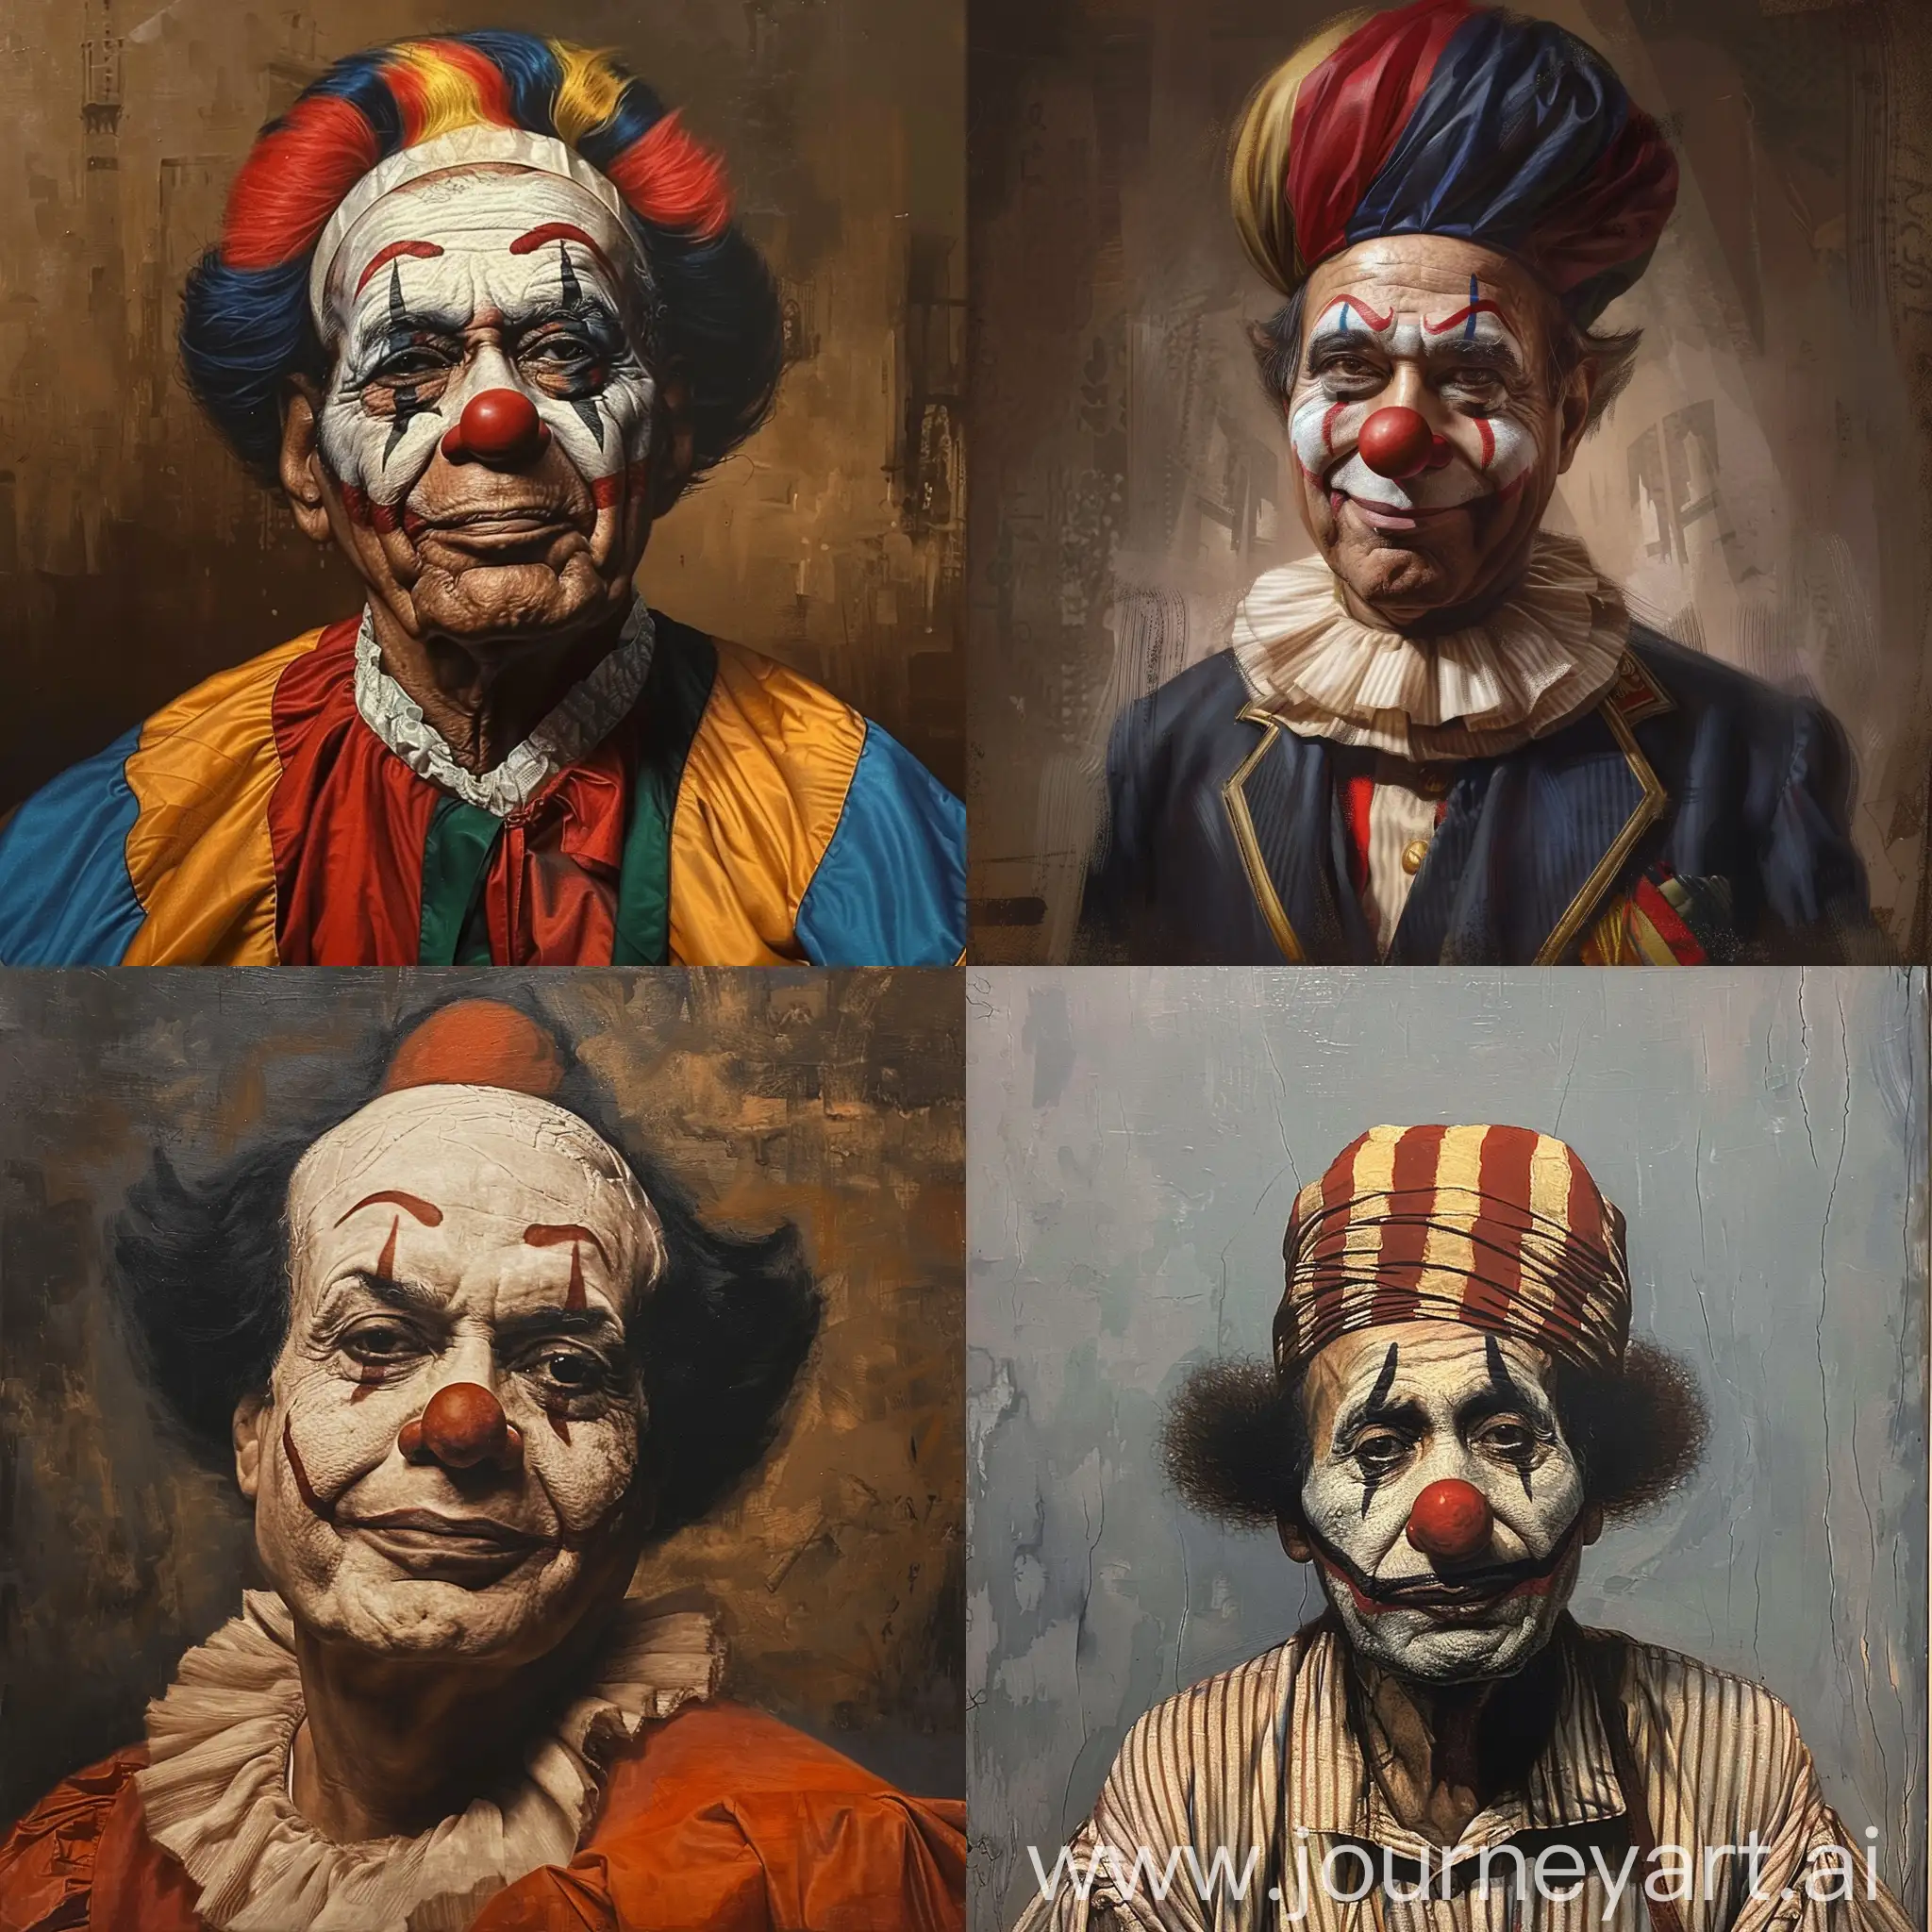 Abdel fattah el sisi wearing clown cloths